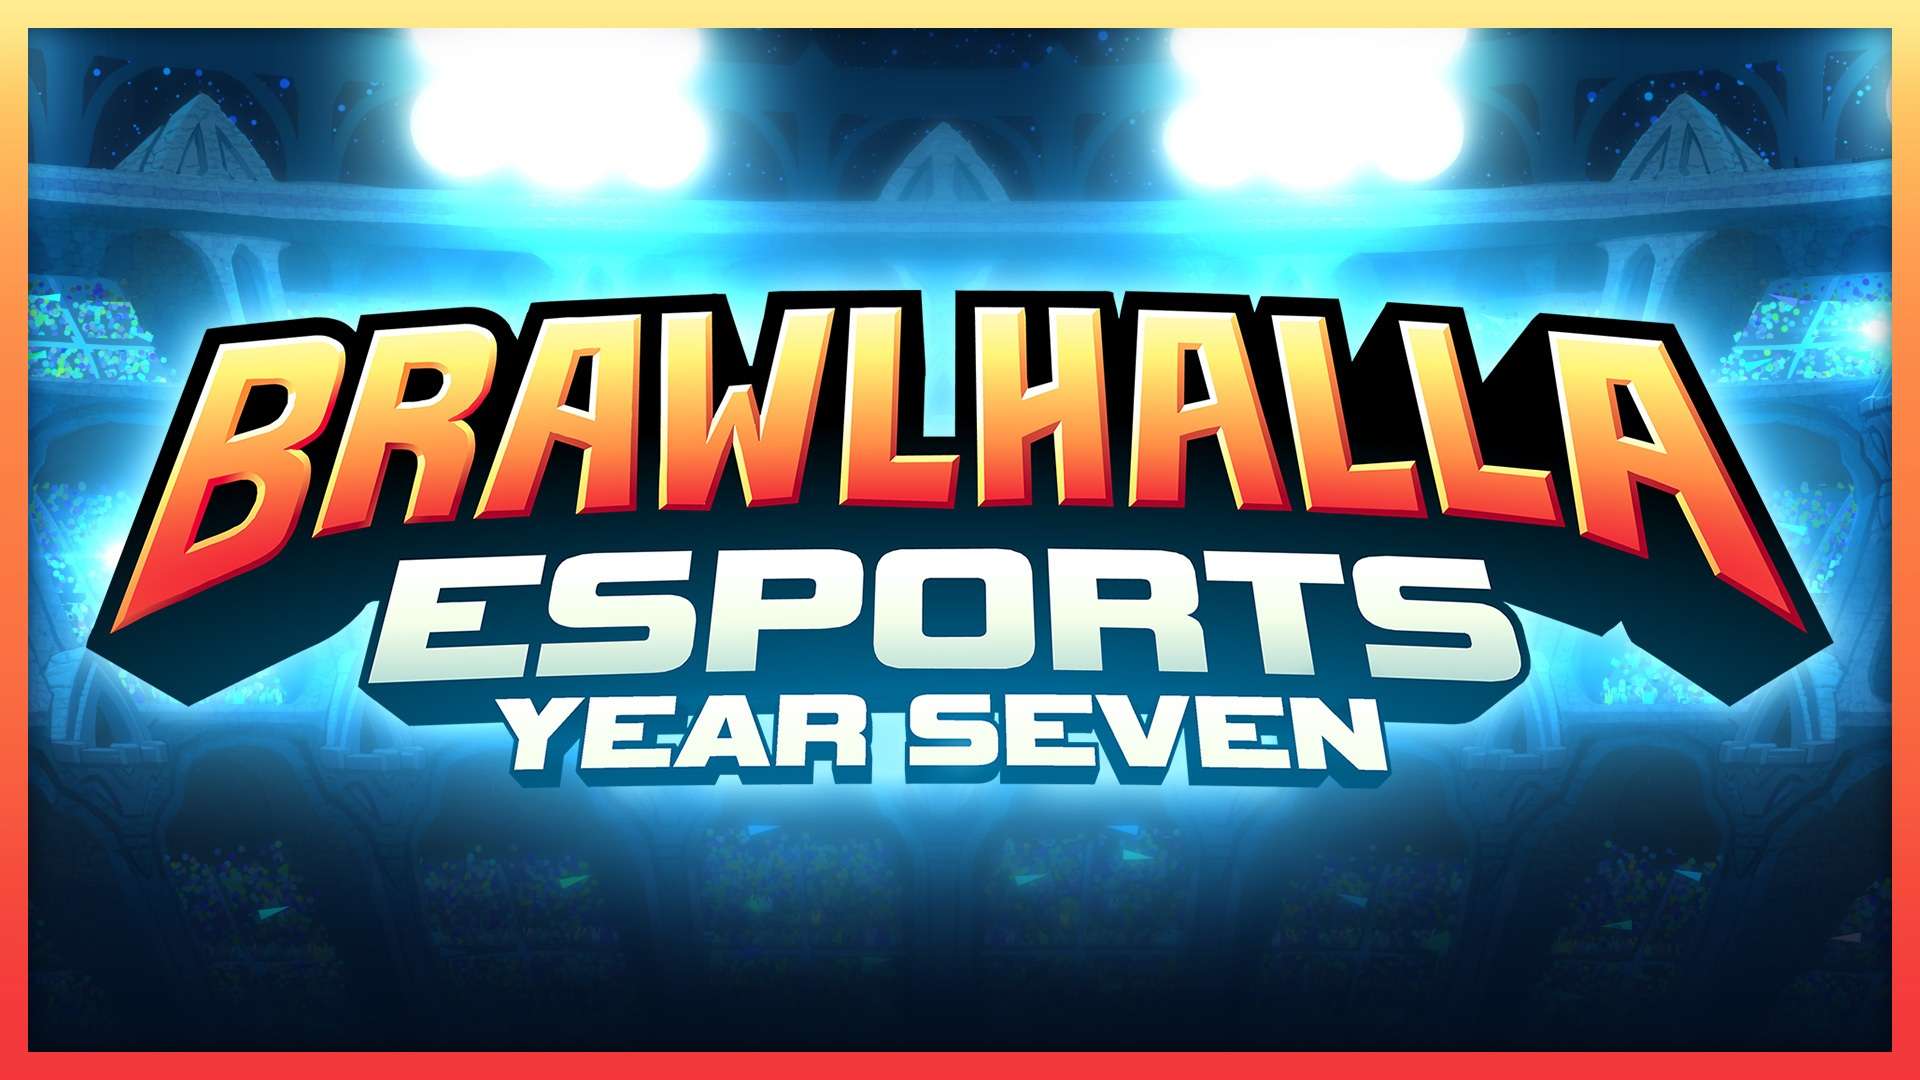 Brawlhalla Esports Year Seven